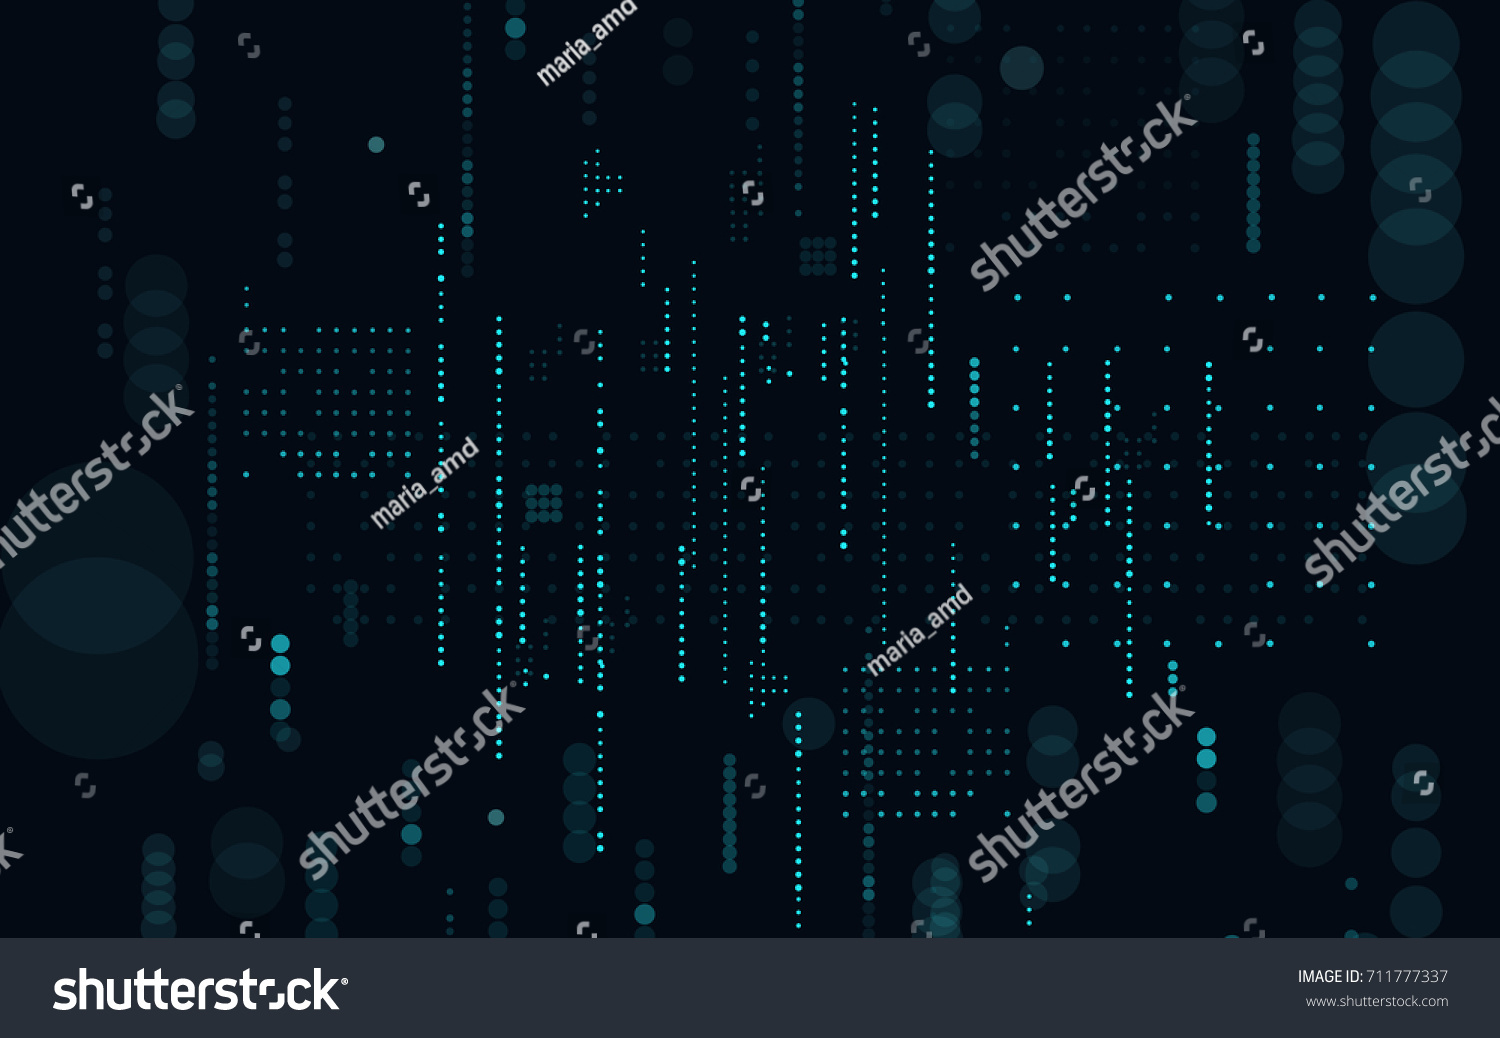 Technological background vector illustration.Matrix.Binary Computer Code.Falling dots #711777337